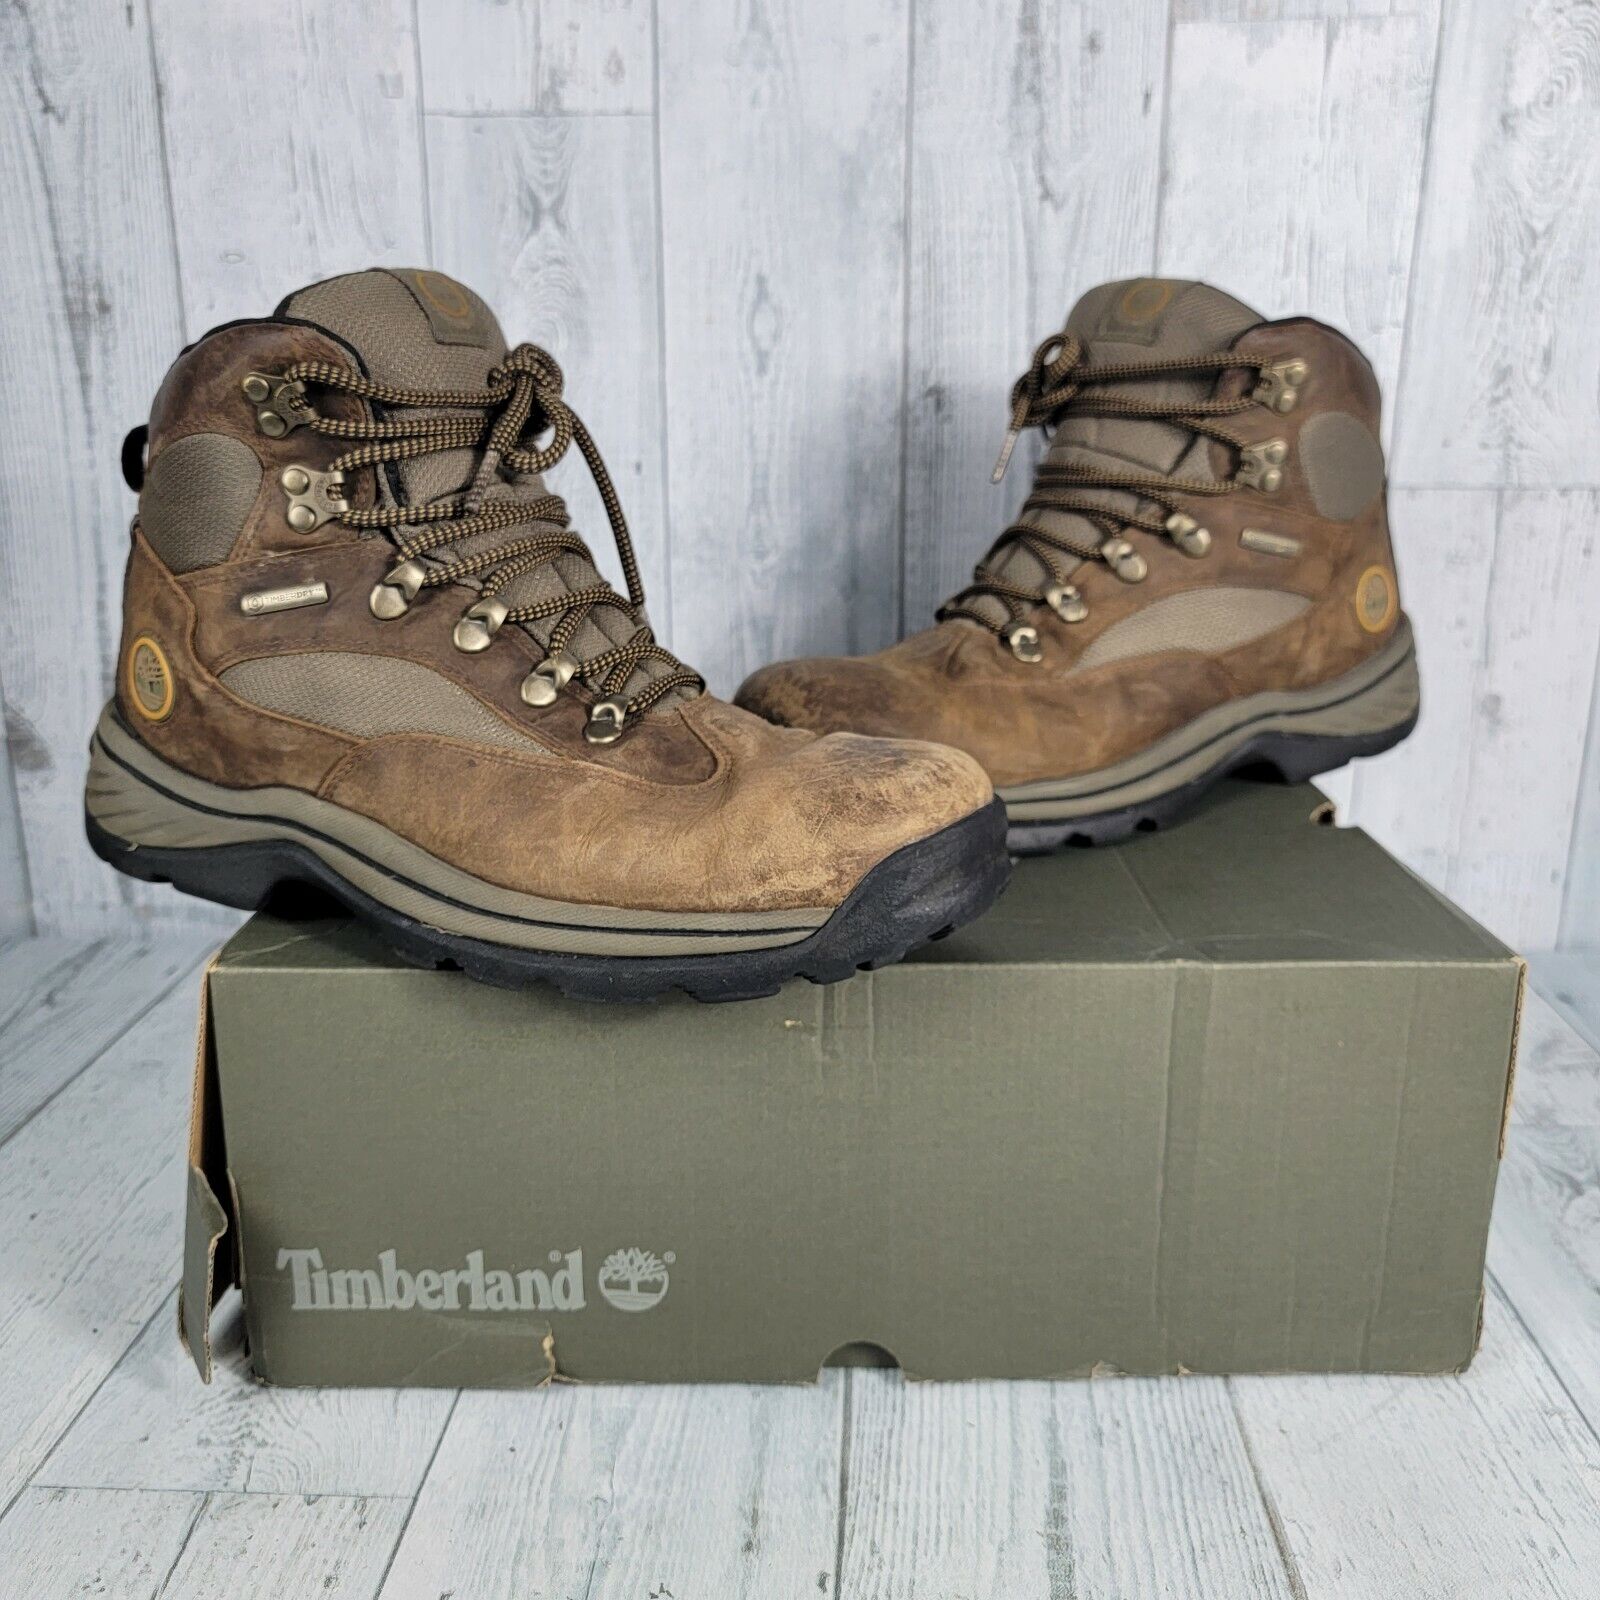 Inspector Amplia gama rosado Timberland Mens White Ledge Mid Waterproof Medium Brown Hiking Boots Size 9  G1 | eBay